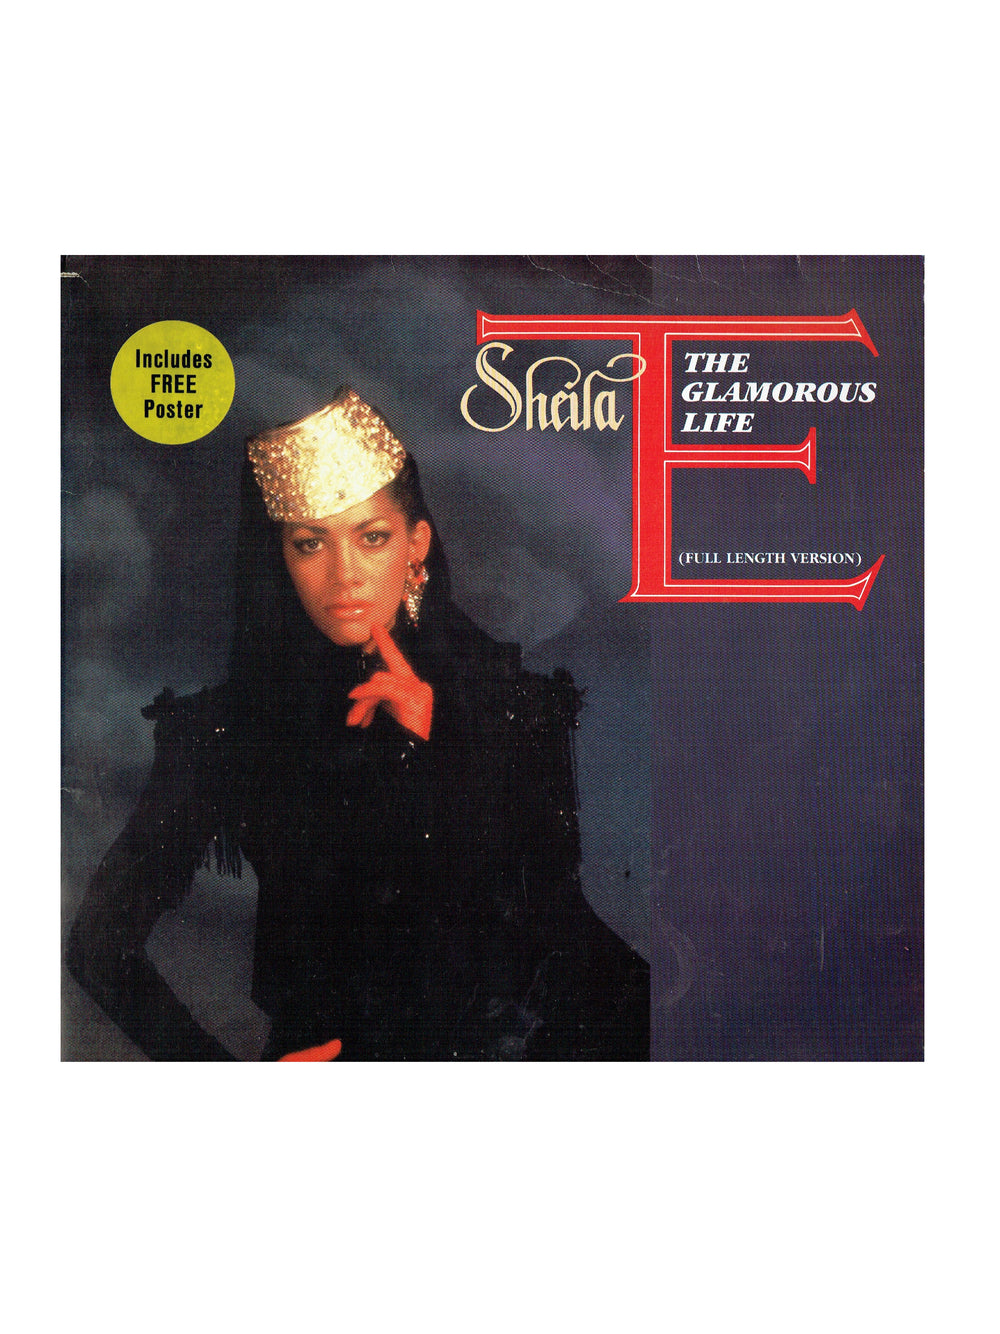 Sheila E The Glamorous Life 12 Vinyl Single EU German With Poster Prince AS